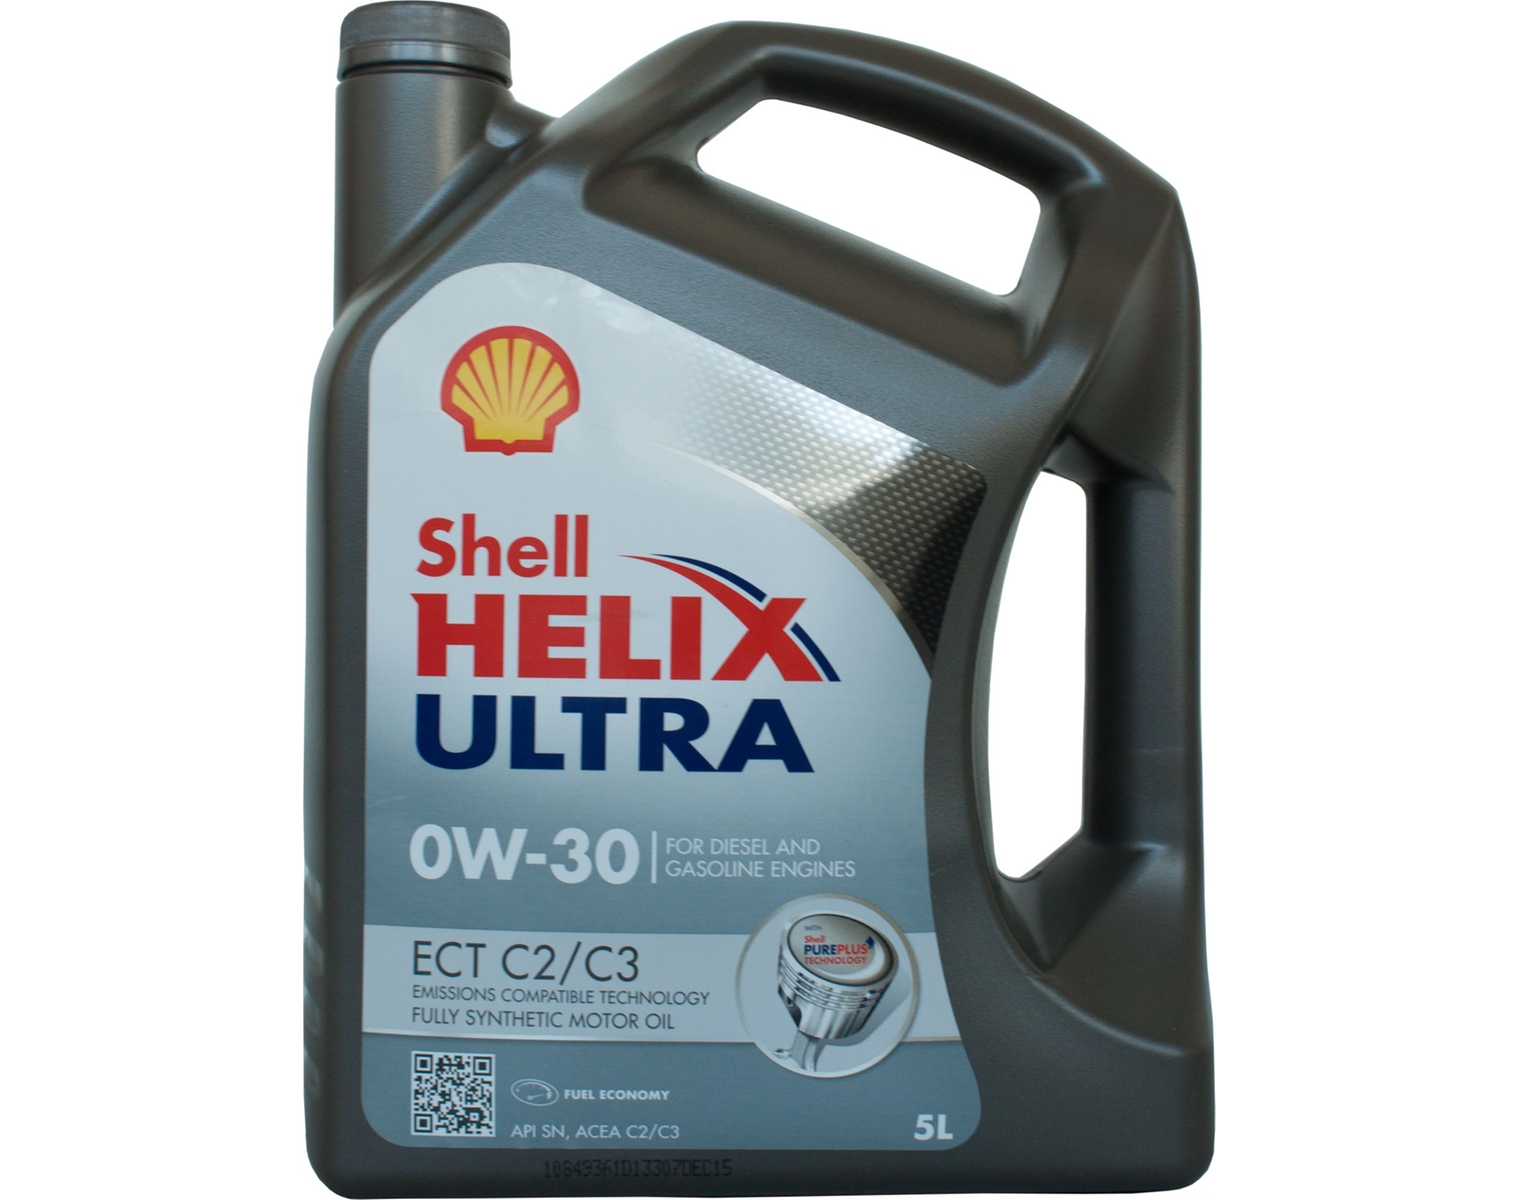 Shell ultra am l. Шелл Хеликс ультра 5w30 AG professional. Shell Ultra 0-30. Shell Helix Ultra professional av-l 0w-20 4л артикул. Helix Ultra professional av-l 0w-20 1л.